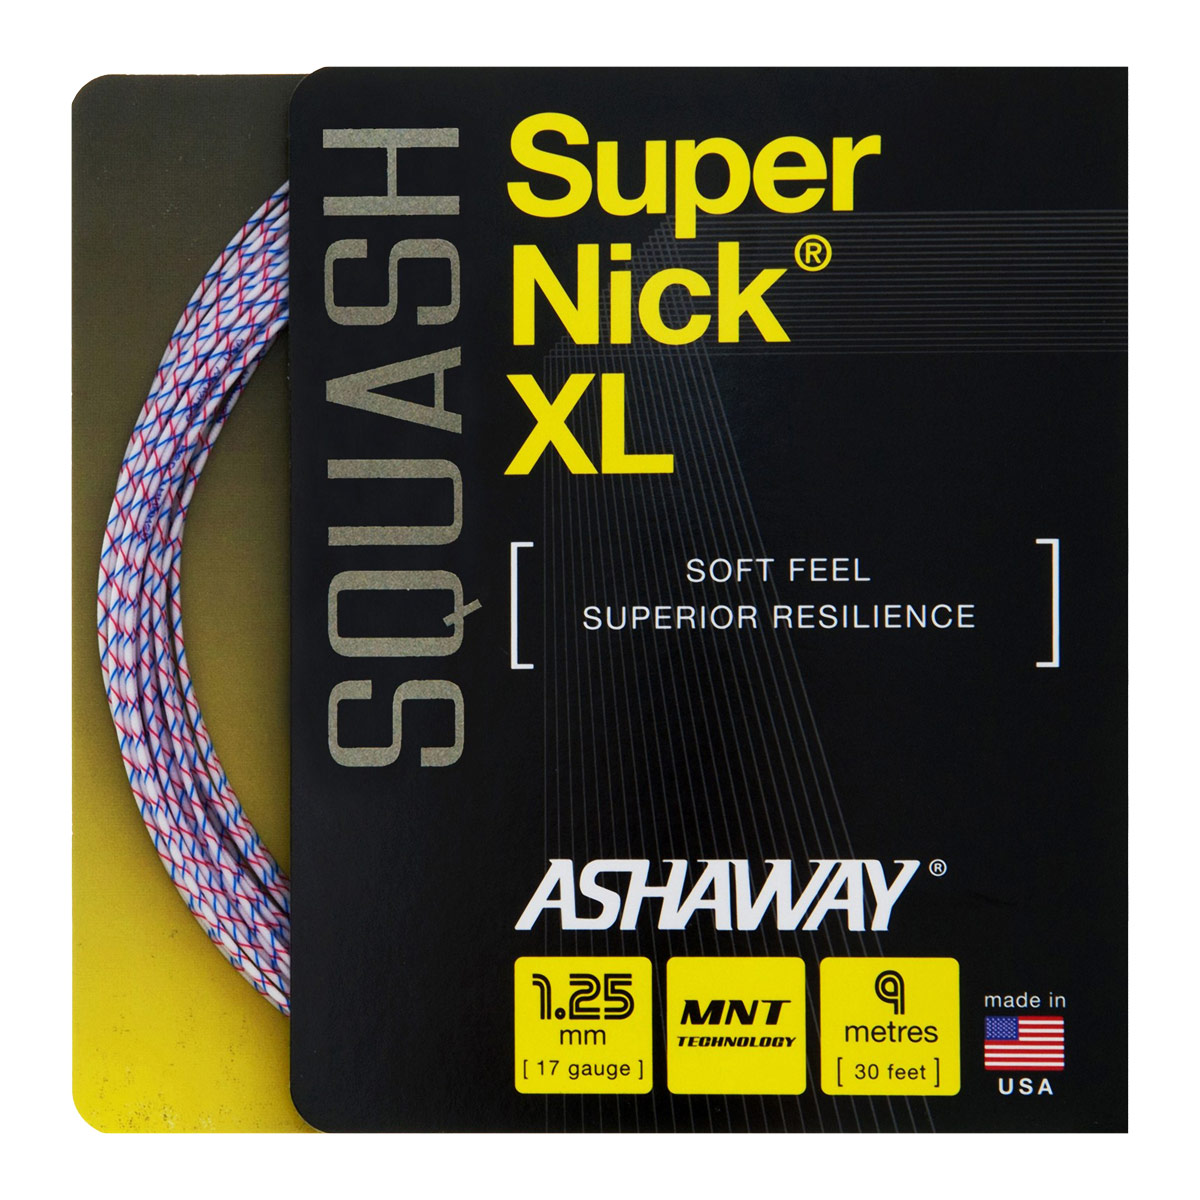 Ashaway Super Nick XL